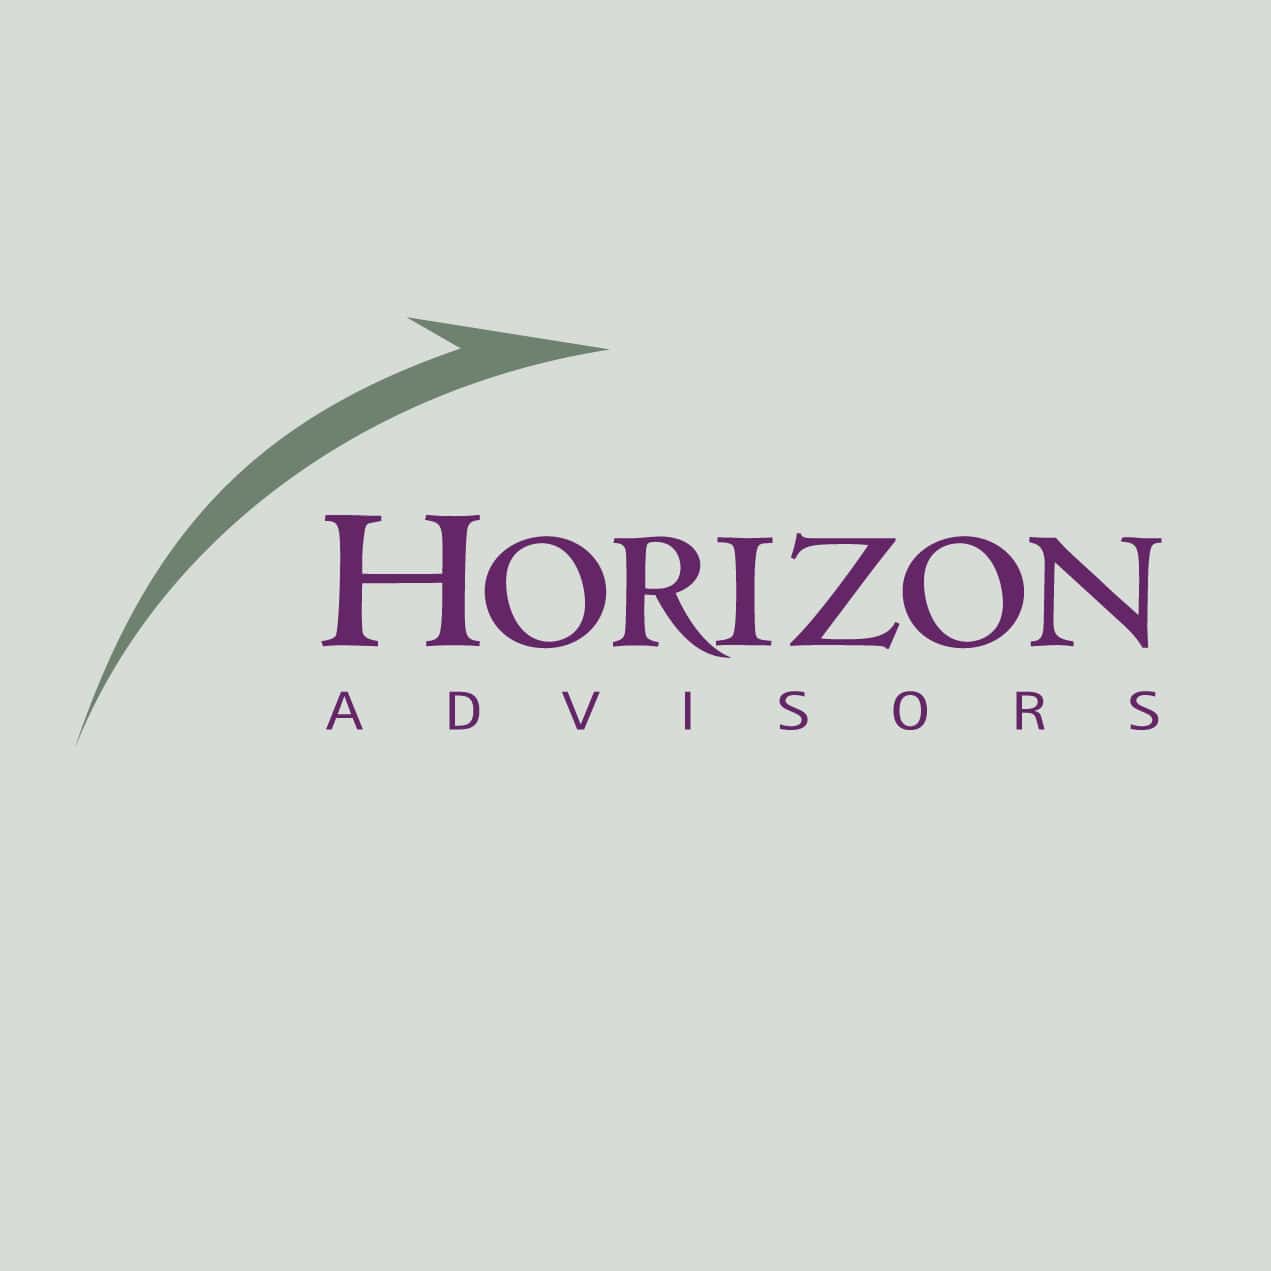 Horizon Wealth Advisors